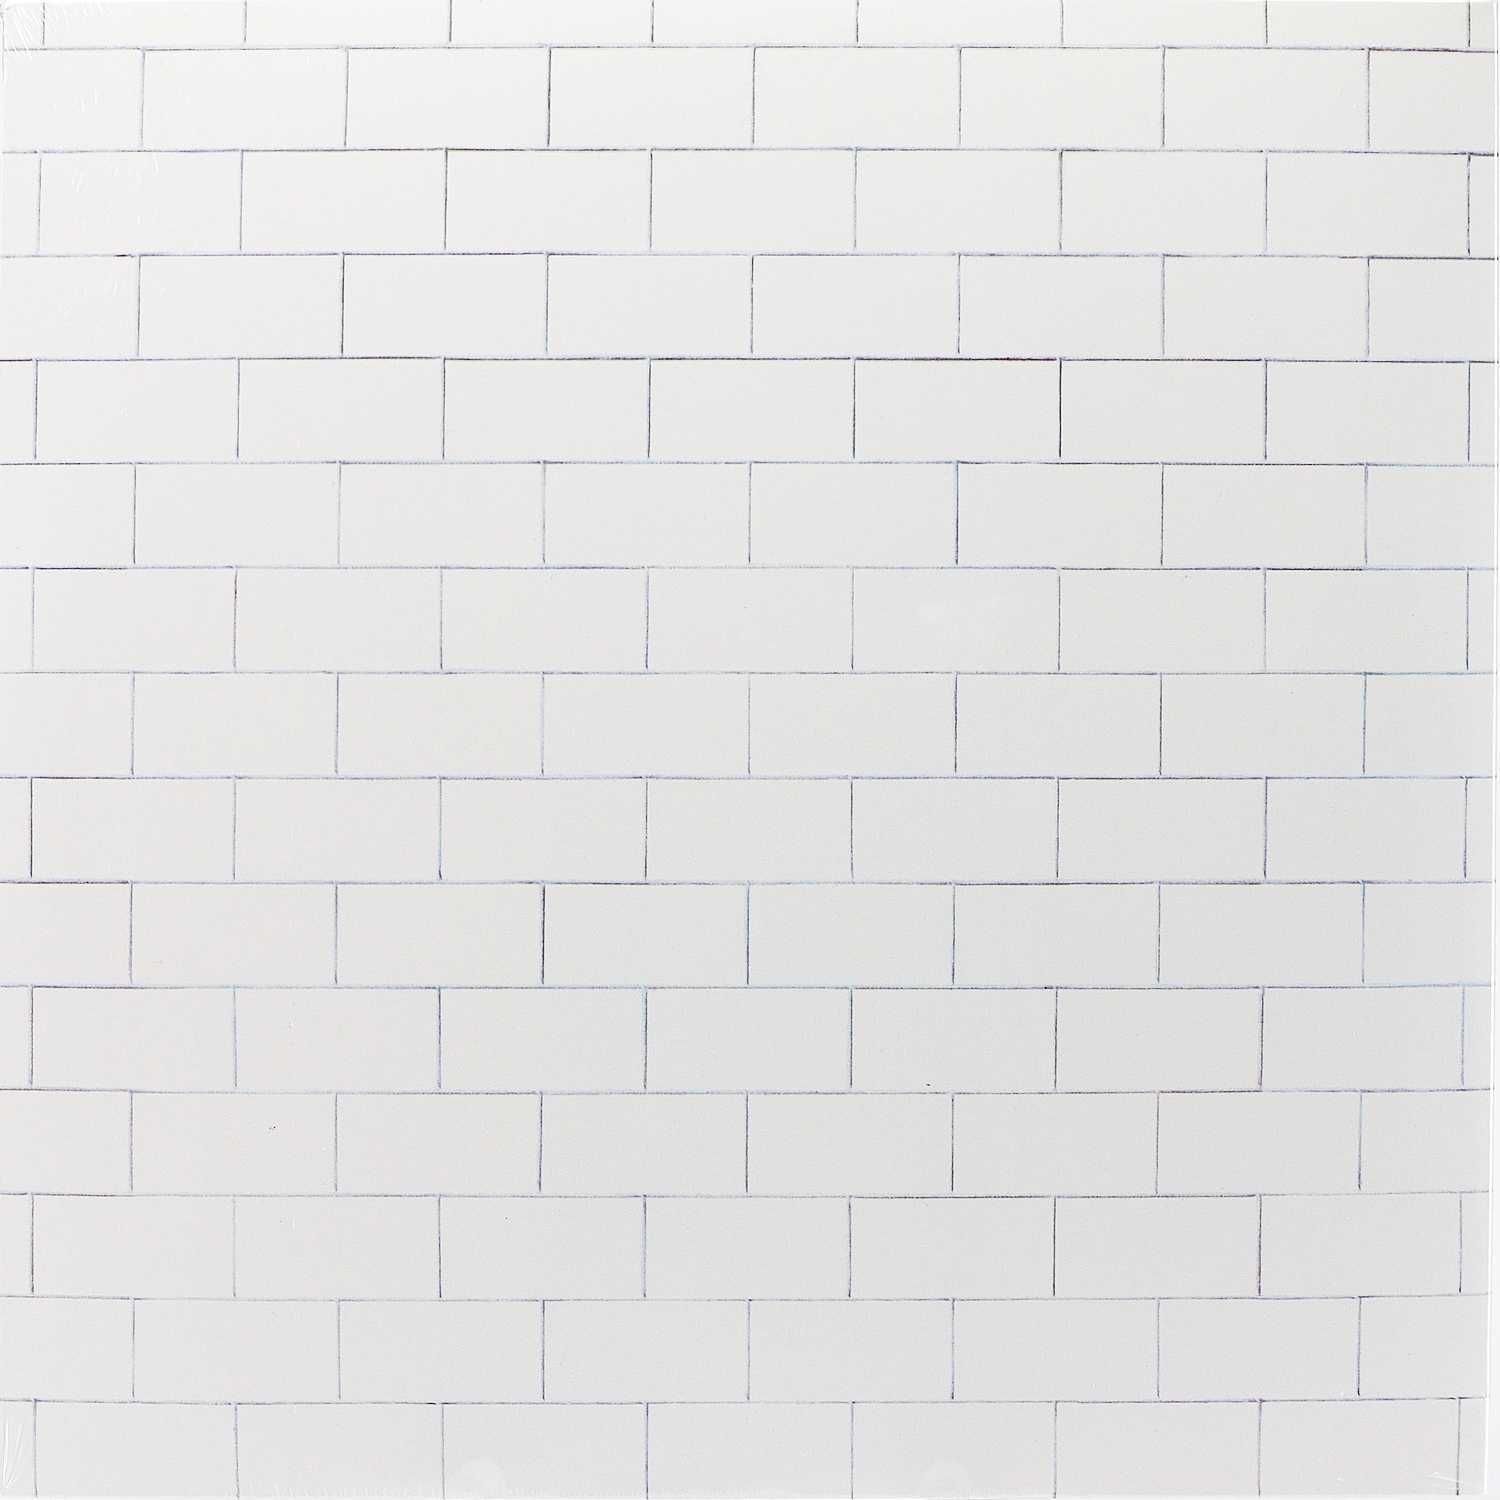 Pink Floyd, The Wall, СТЕНА на 2LP винил, 180 gr, запечатанный!